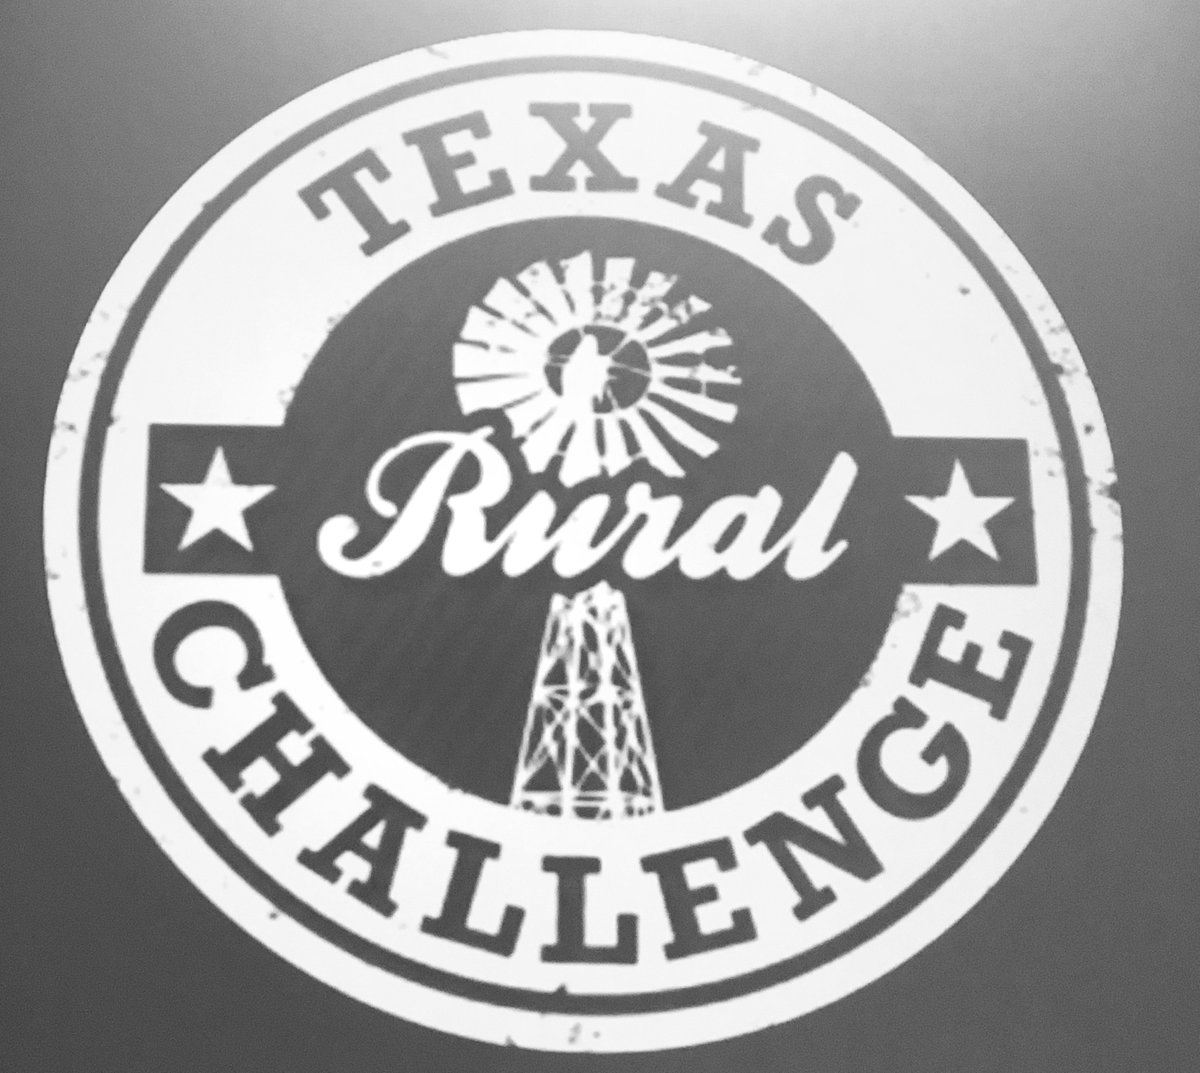 2019 #TexasRuralChallenge begins today #newbraunfelstx